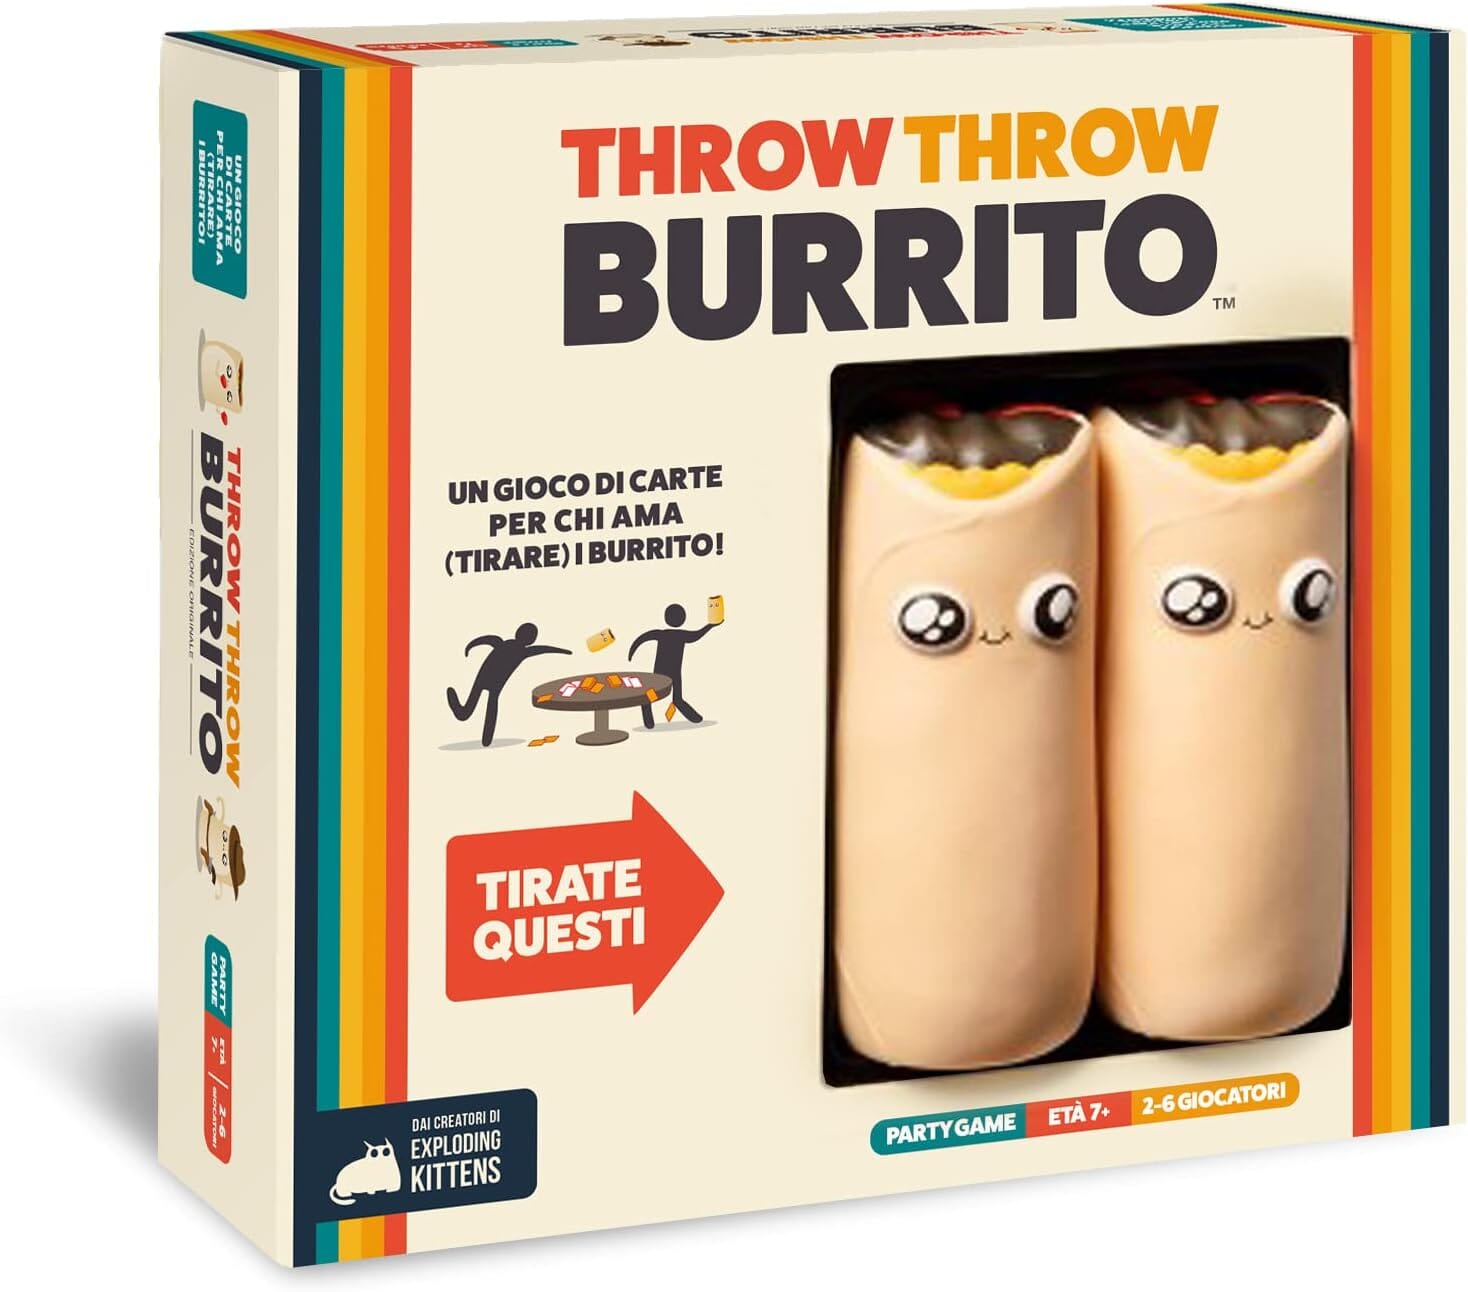 Throw Throw Burrito toysvaldichiana.it 